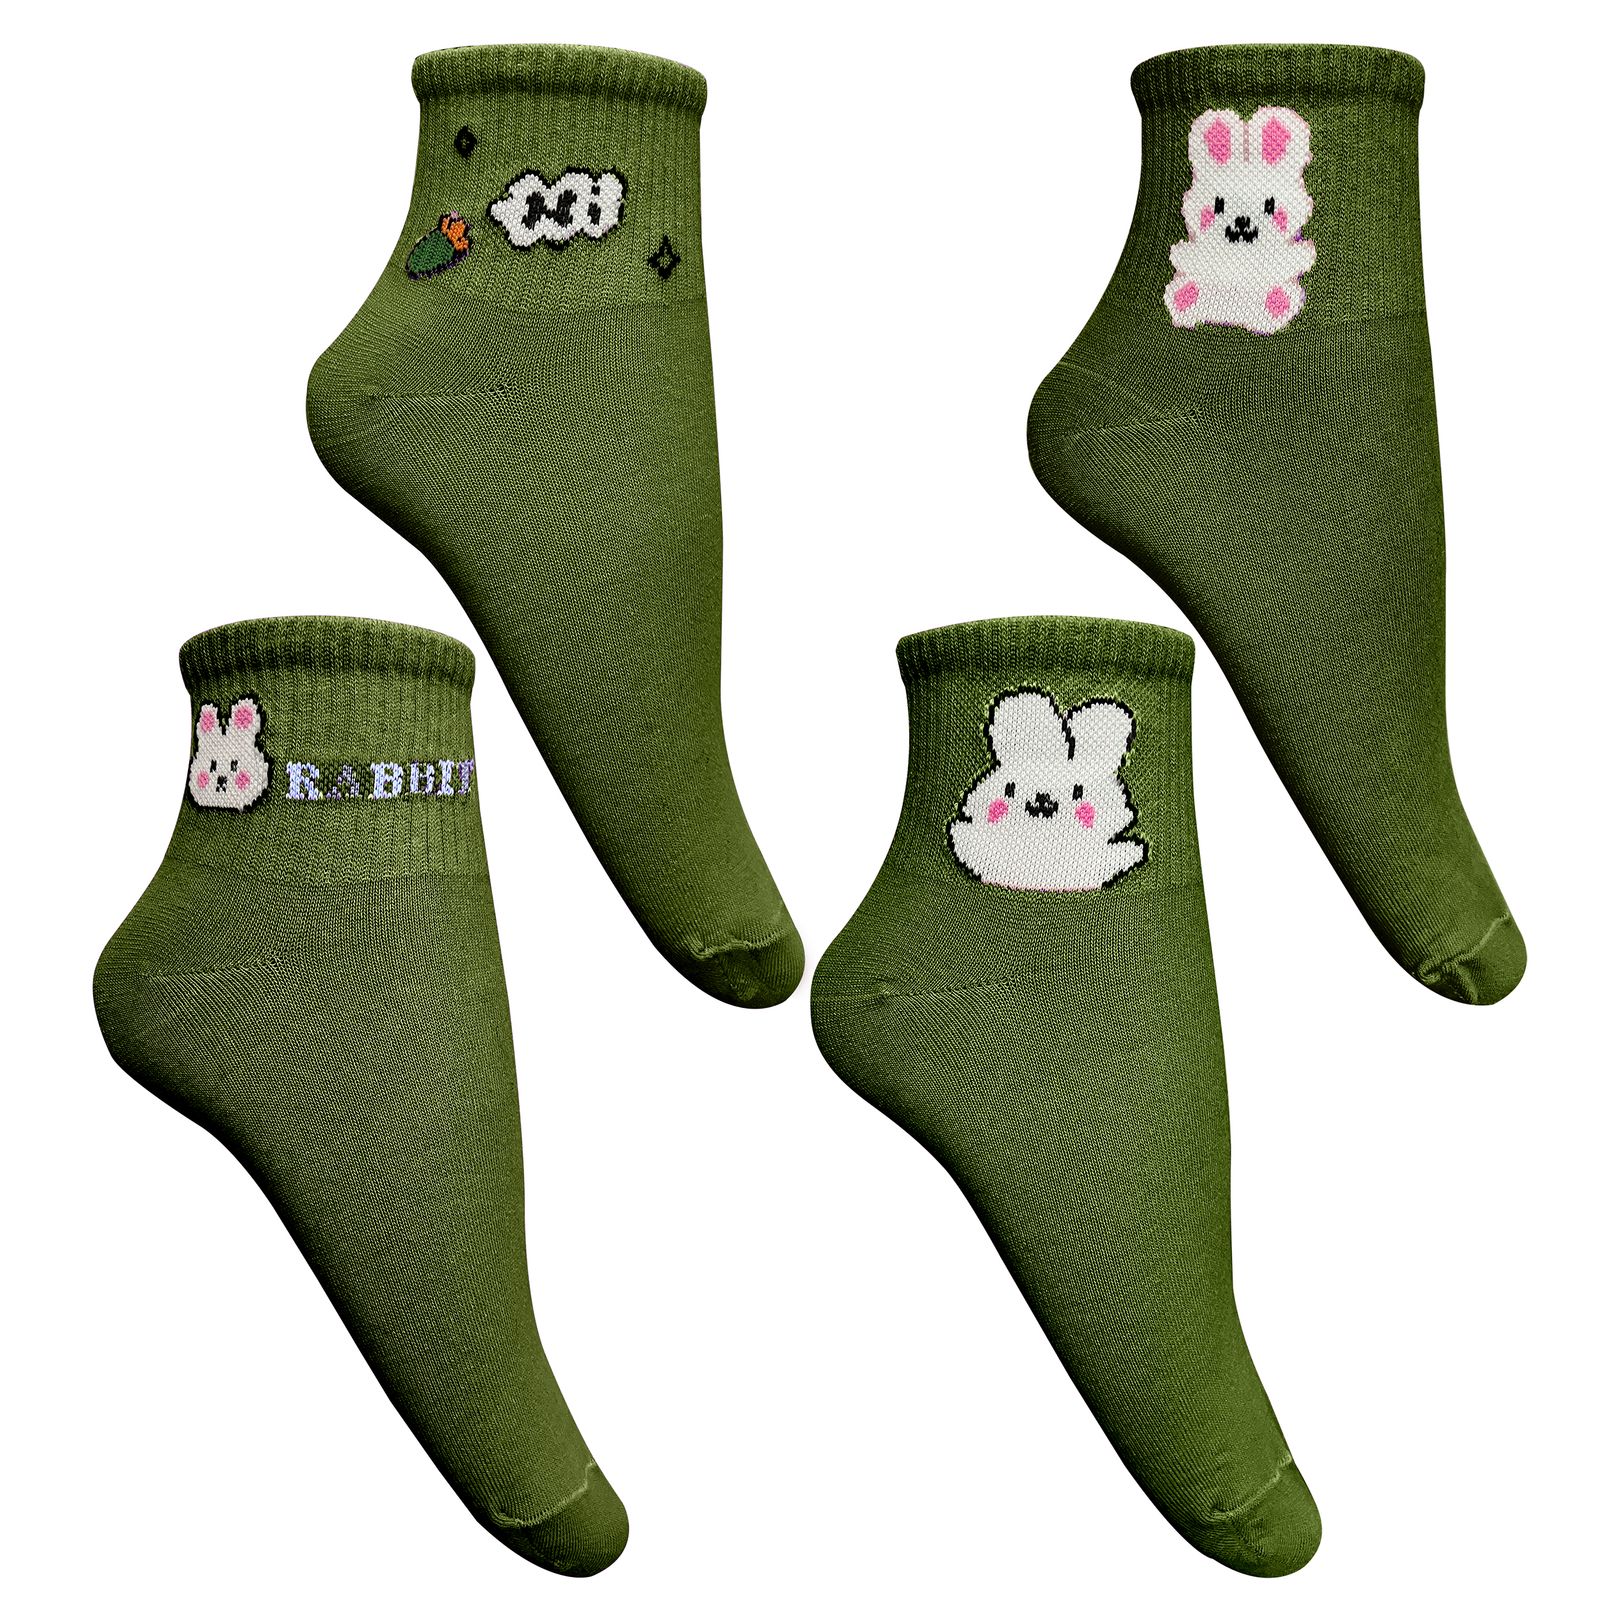 جوراب زنانه تن پوش هنگامه مدل نیم ساق خرگوشی کد GR02 بسته 4 عددی -  - 1